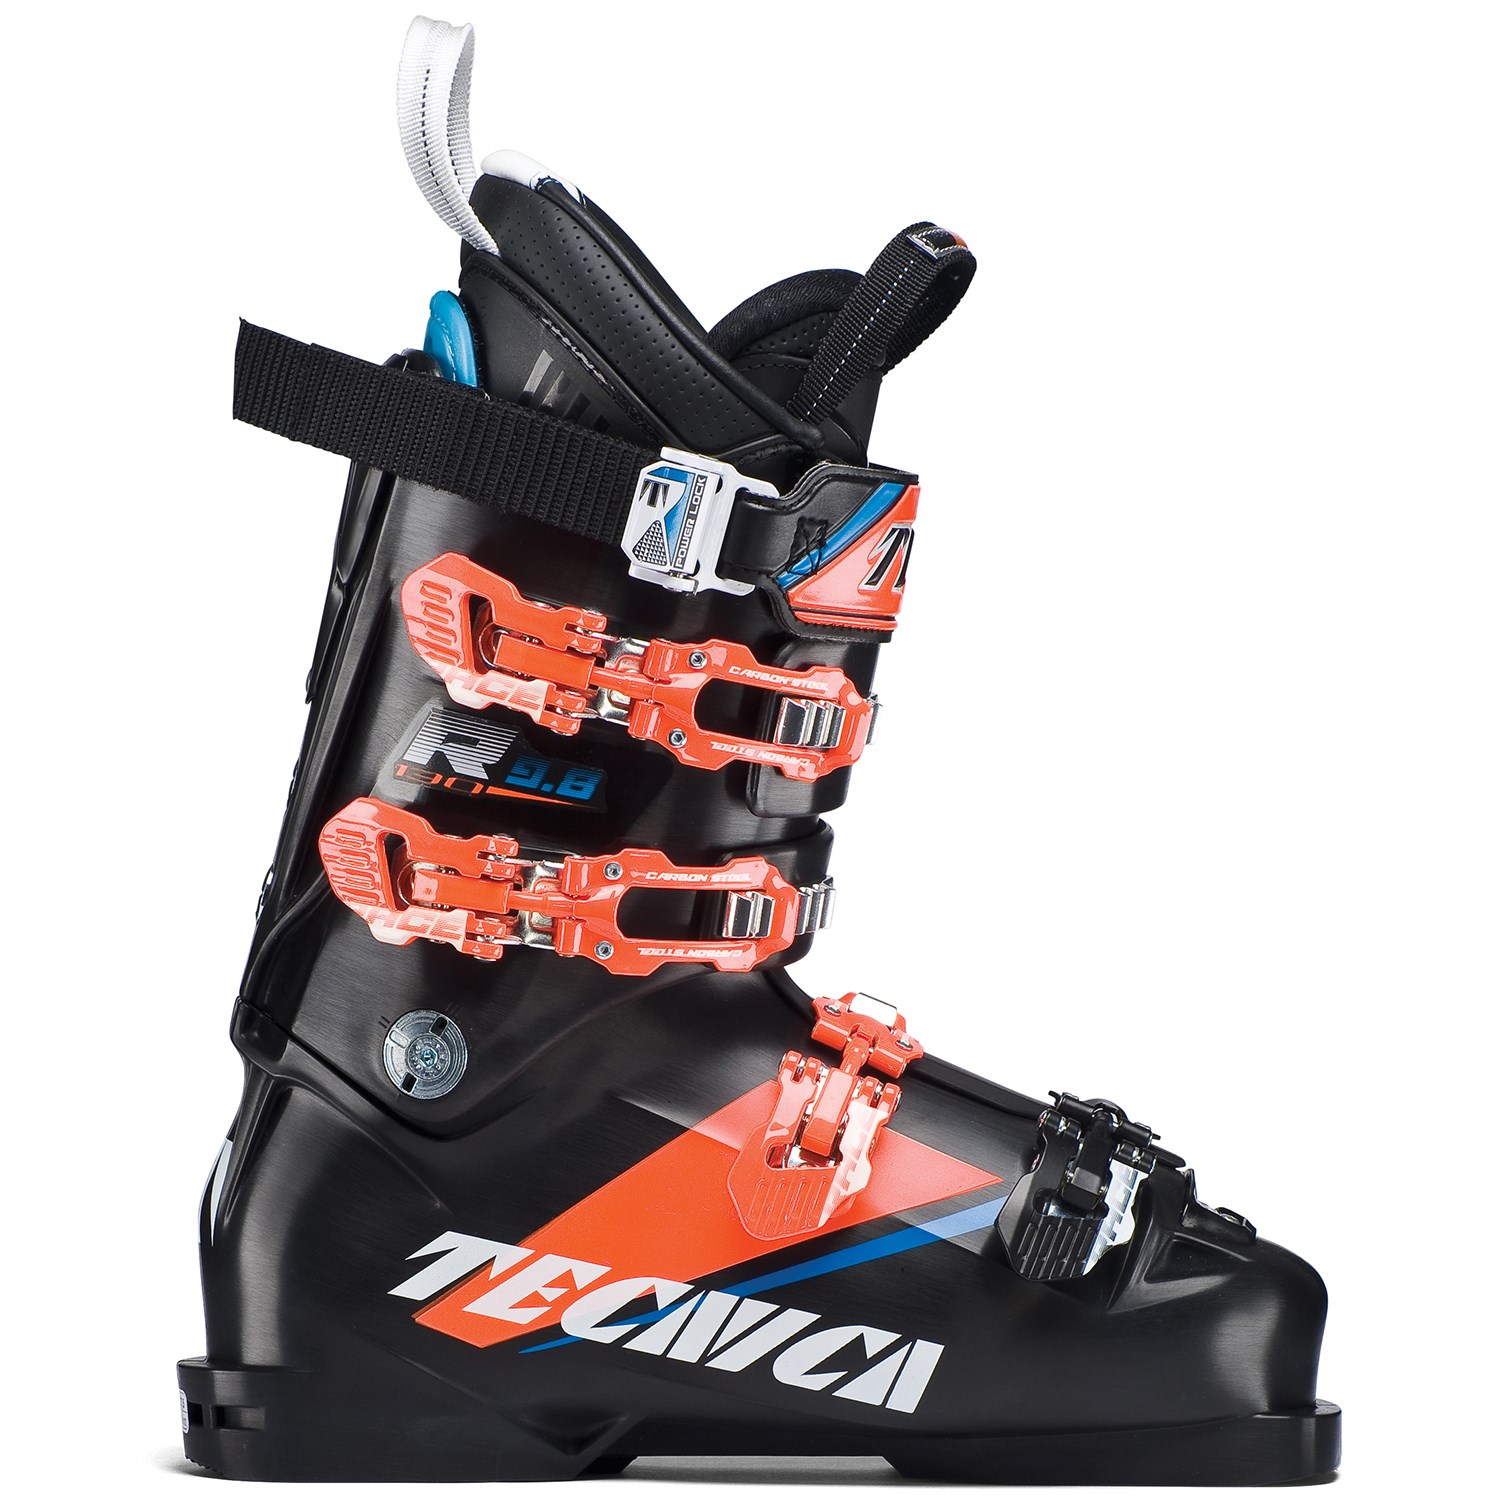 Veraangenamen Verbaasd zoon Tecnica R 9.8 110 Alpine Ski Boots 2015 | evo